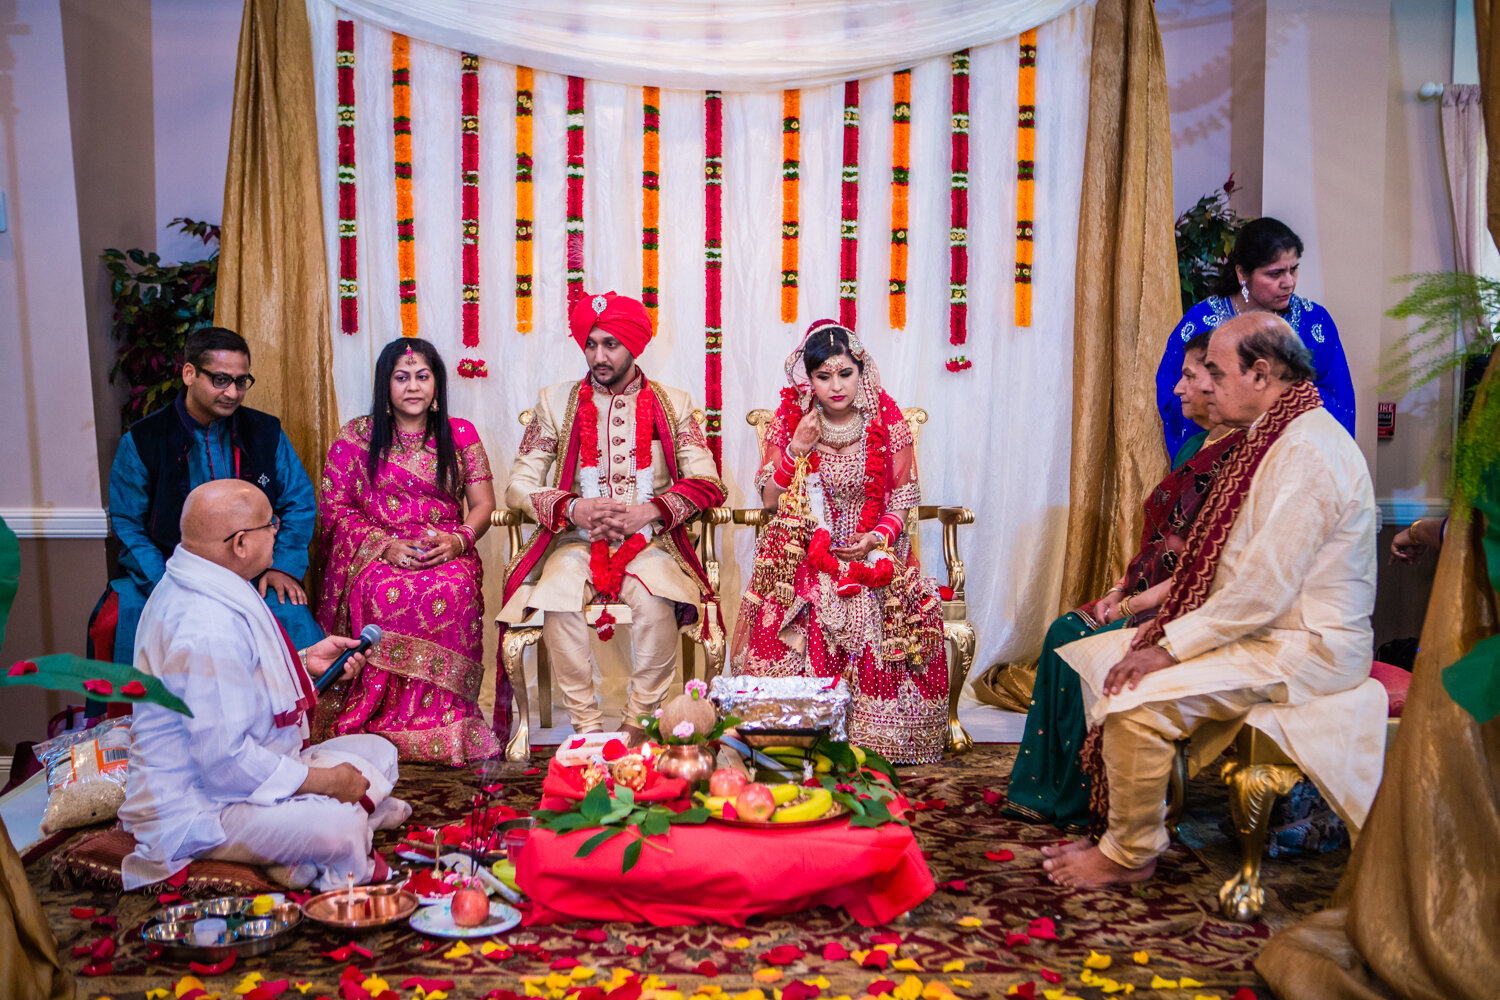   Denver Indian Wedding by JMGant Photography.&nbsp;  